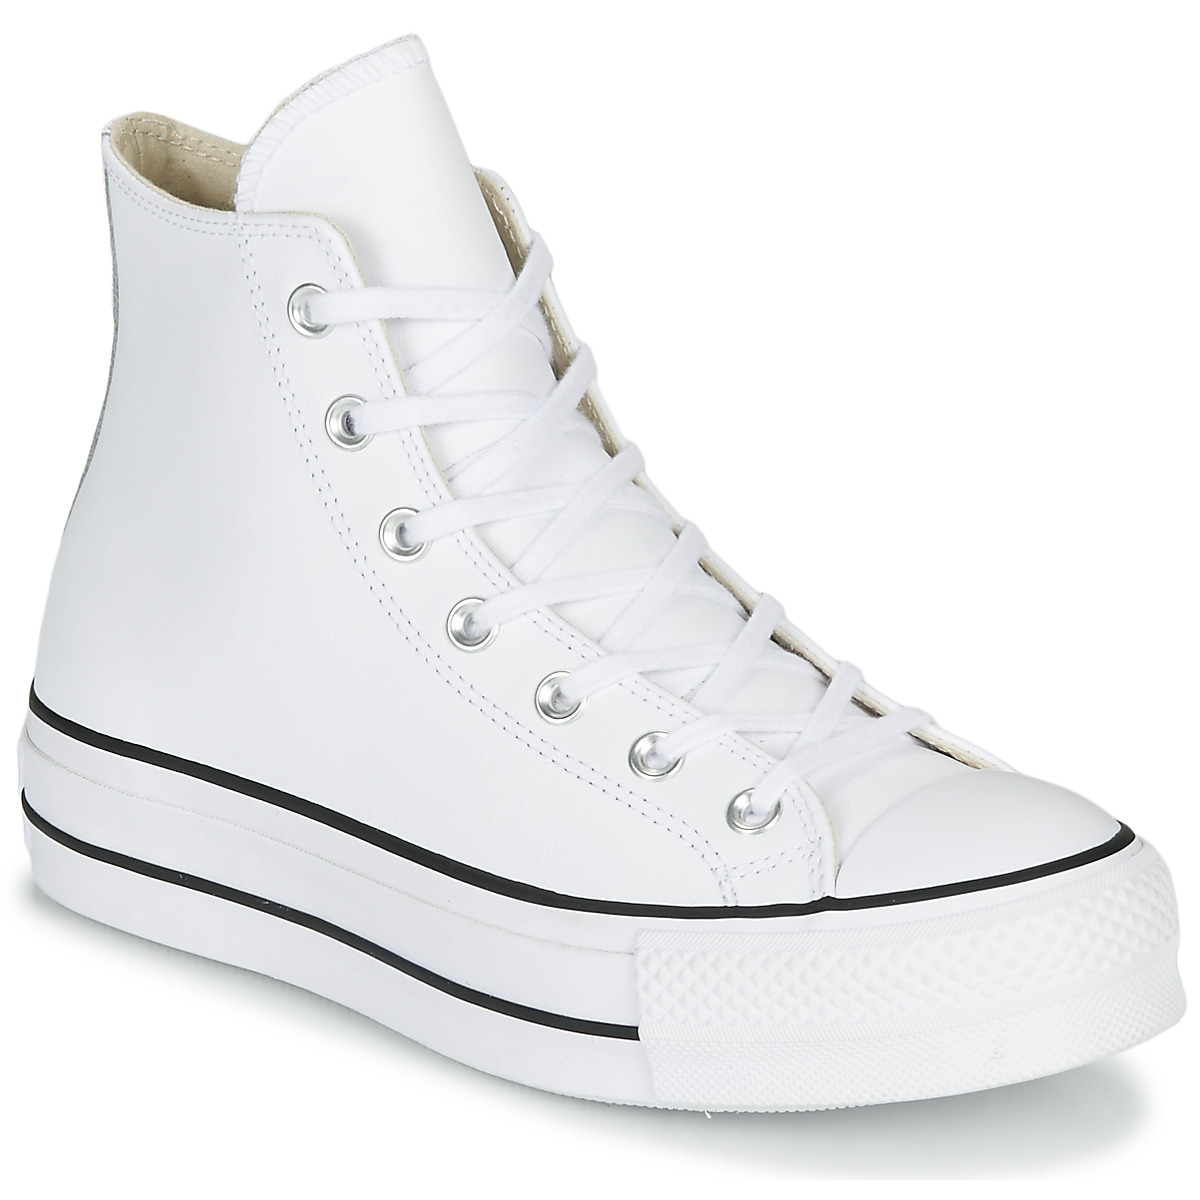 converse chuck taylor all star premium white leather